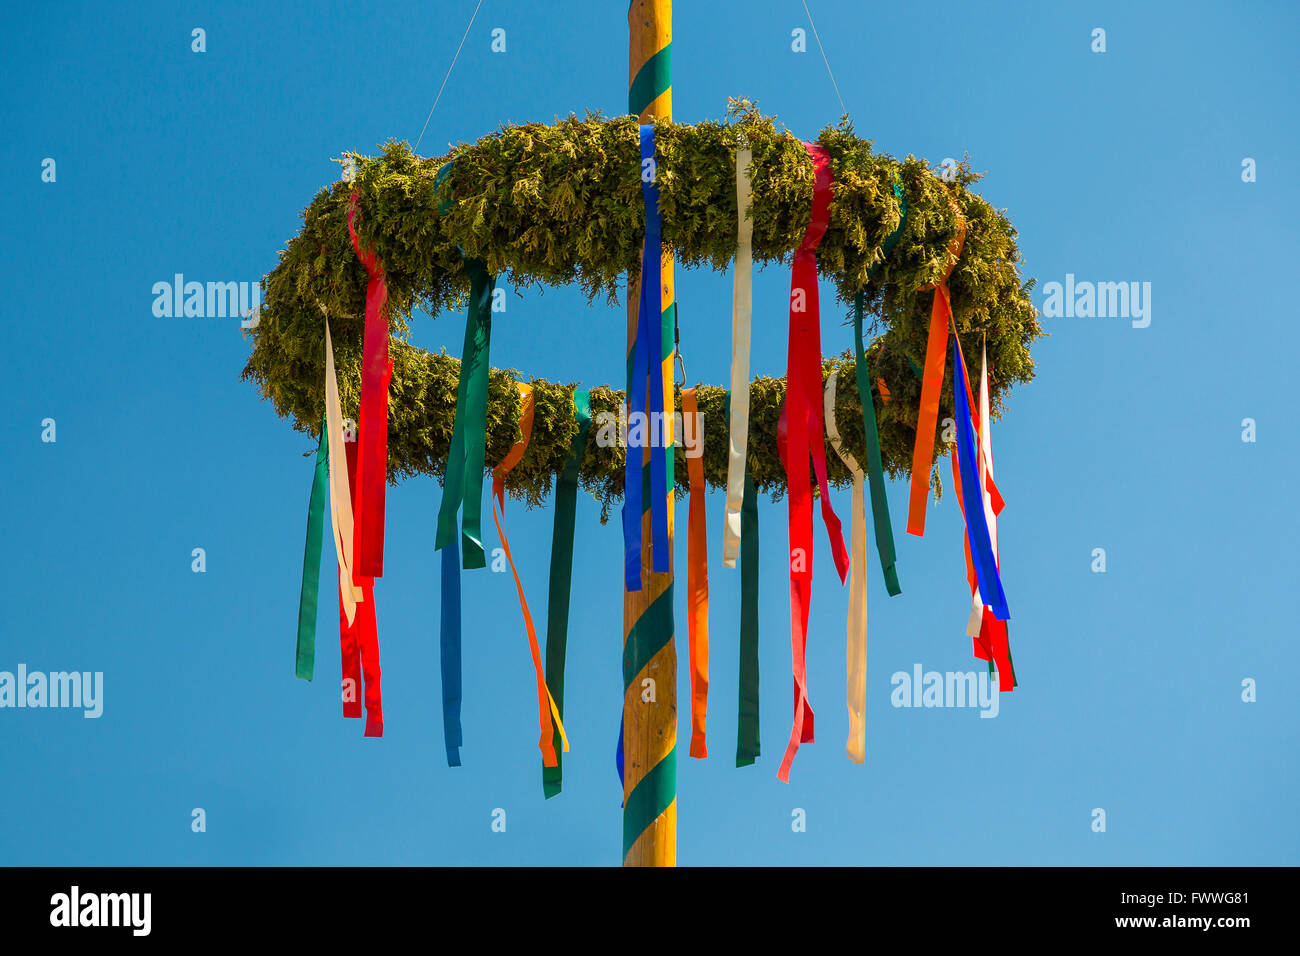 Maypole with colorful ribbons, Coswig-Kötitz, Saxony, Germany Stock Photo